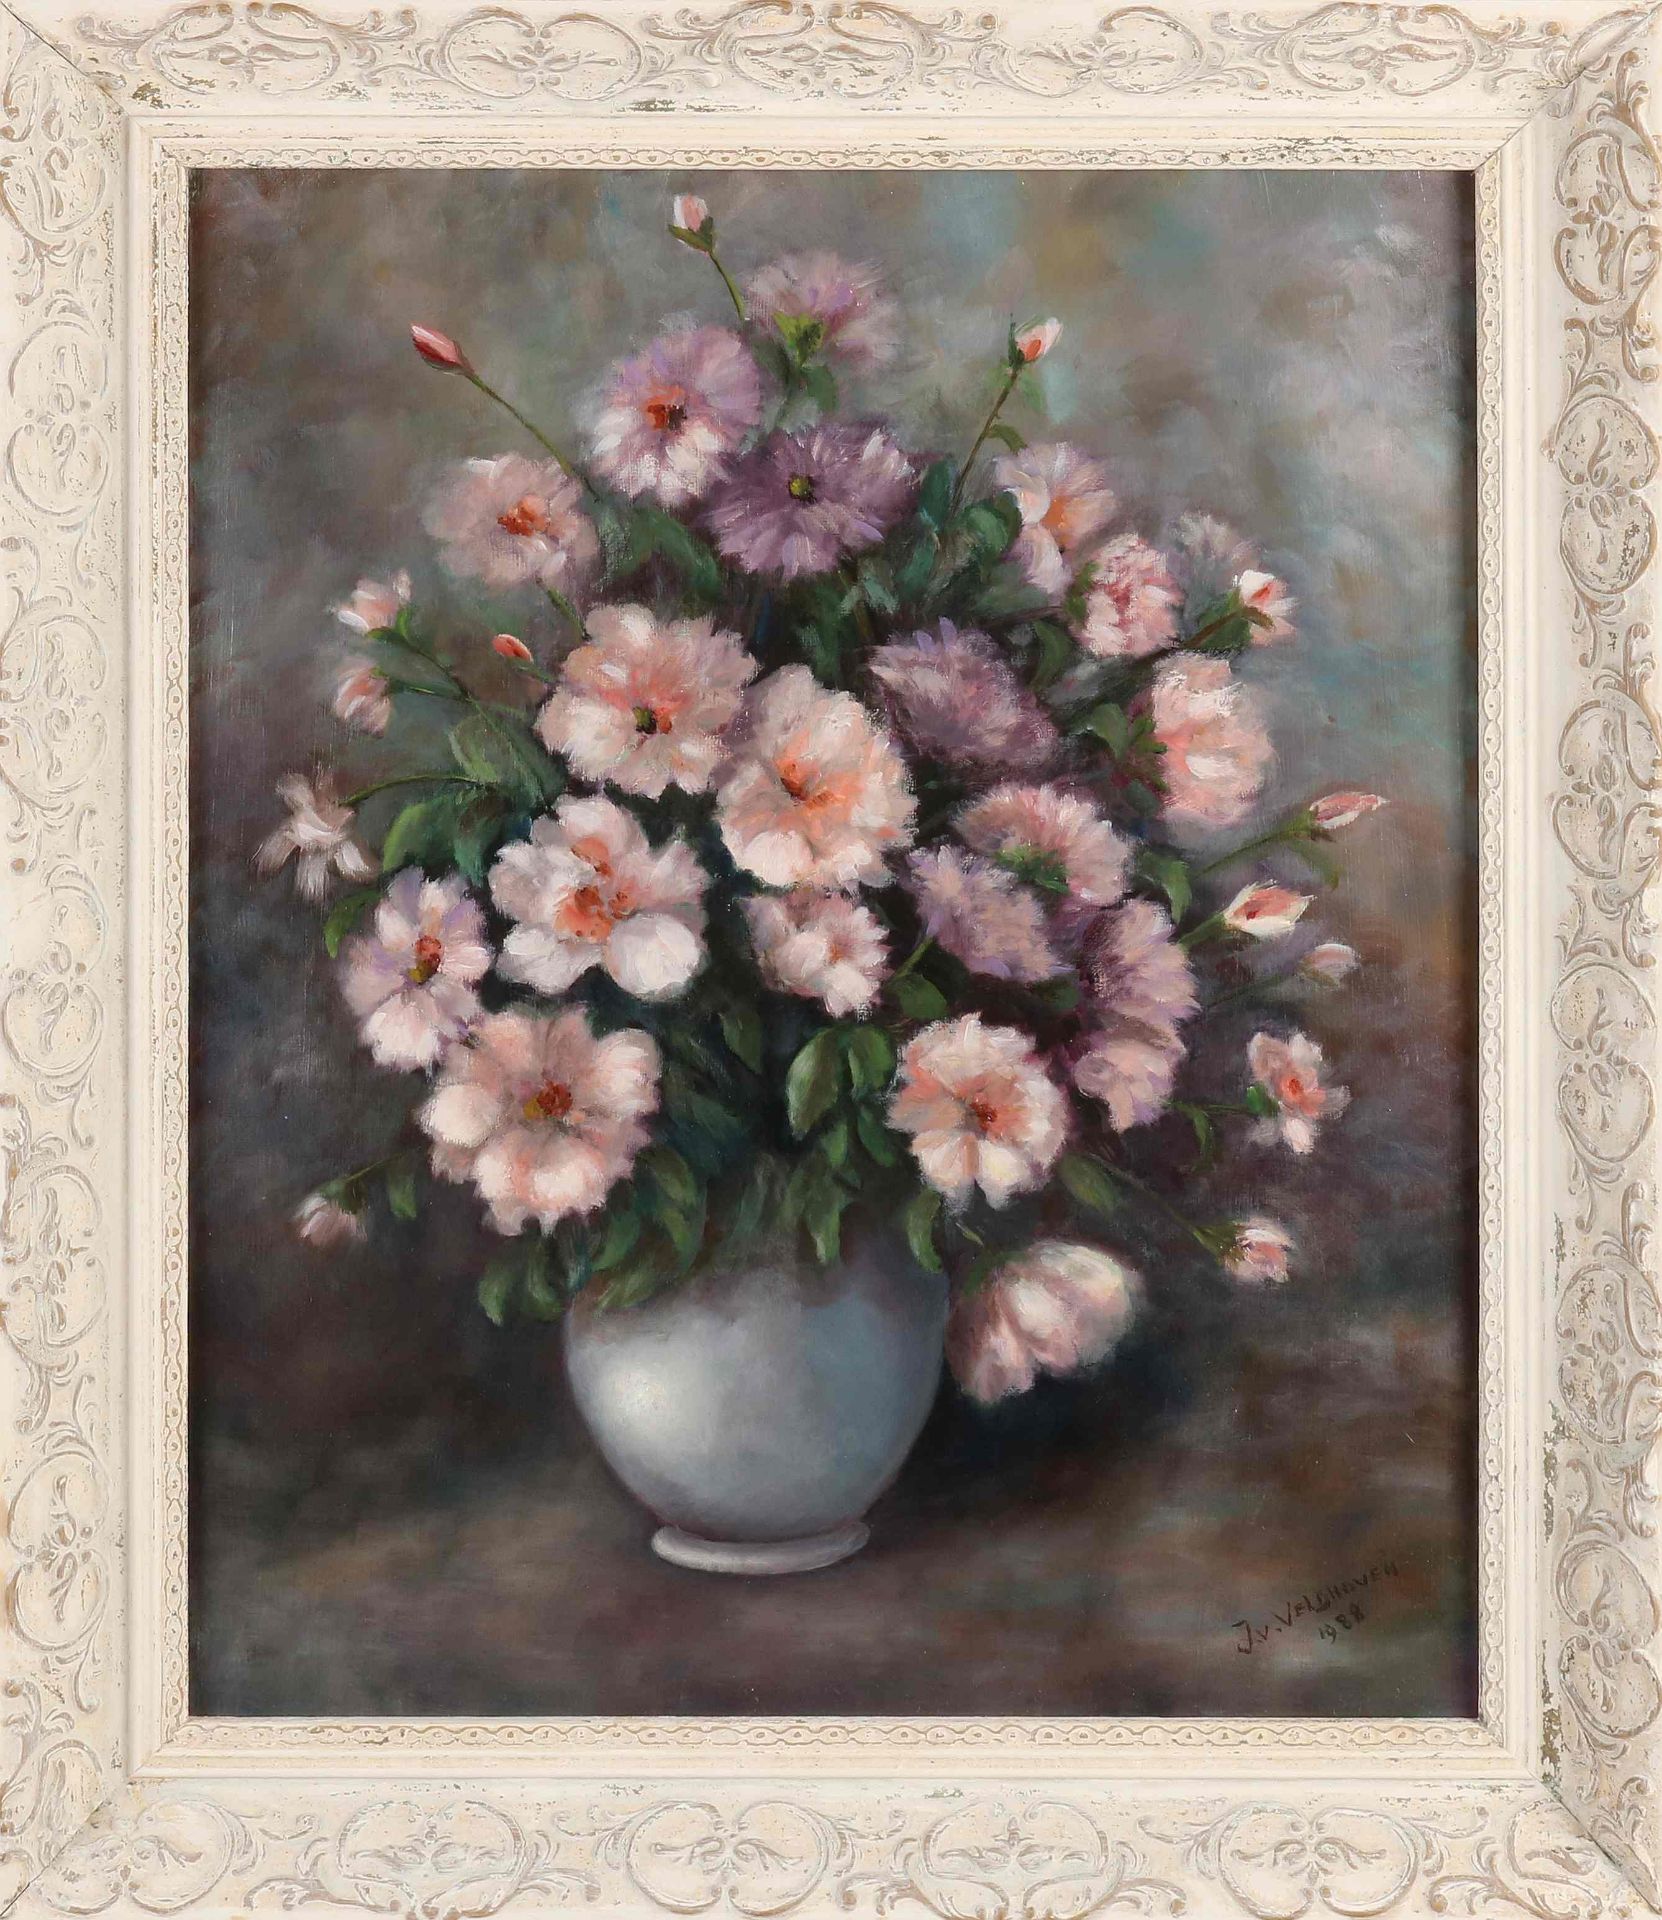 J. van Veldhoven, Vase with flowers